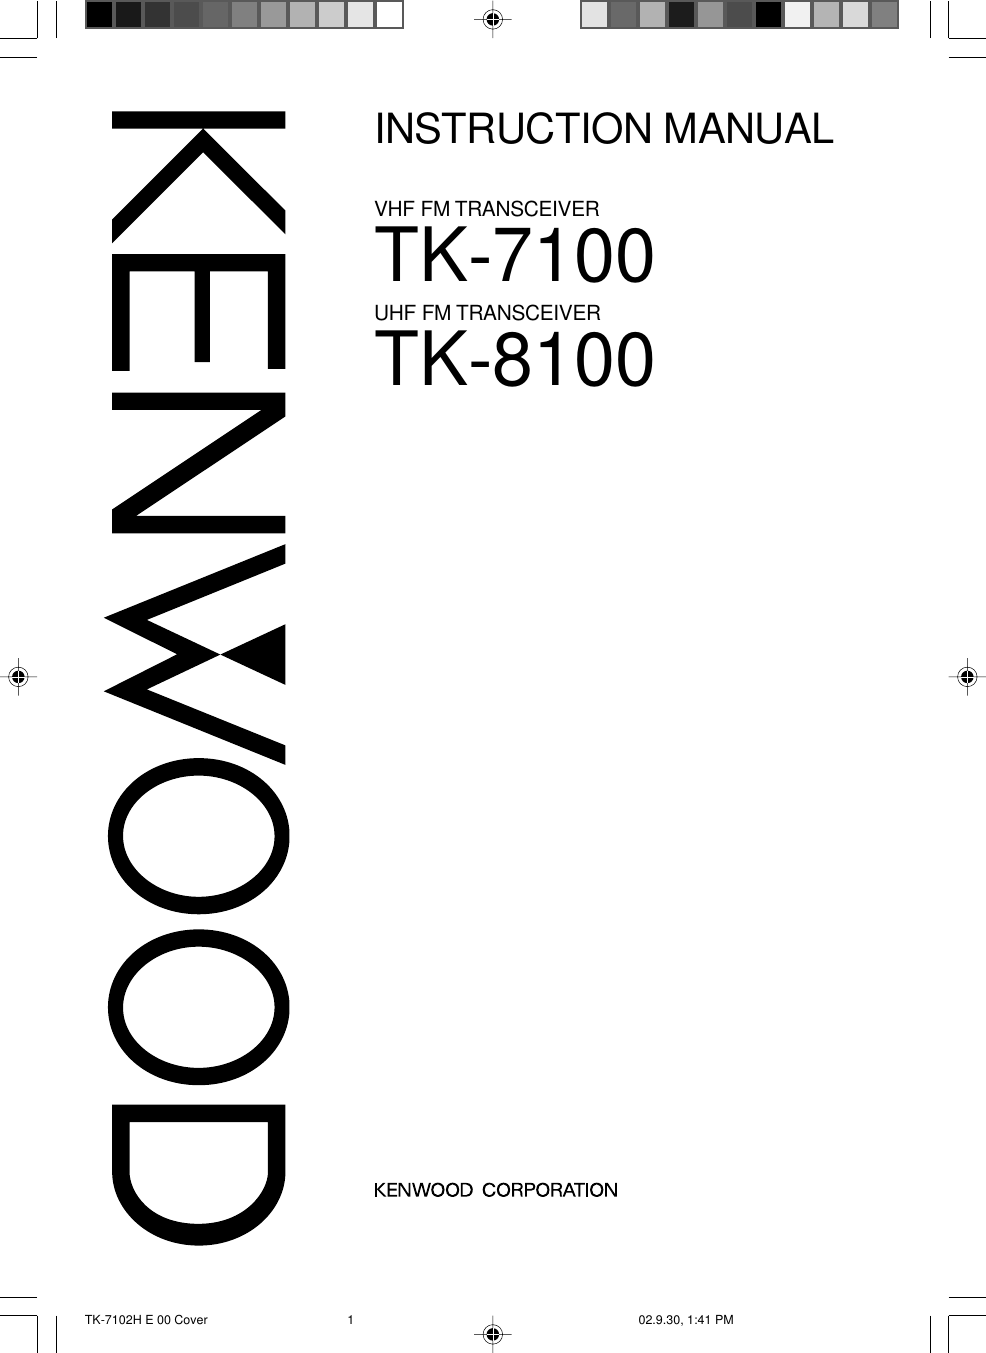 TK-7100INSTRUCTION MANUALVHF FM TRANSCEIVERTK-8100UHF FM TRANSCEIVERTK-7102H E 00 Cover 02.9.30, 1:41 PM1